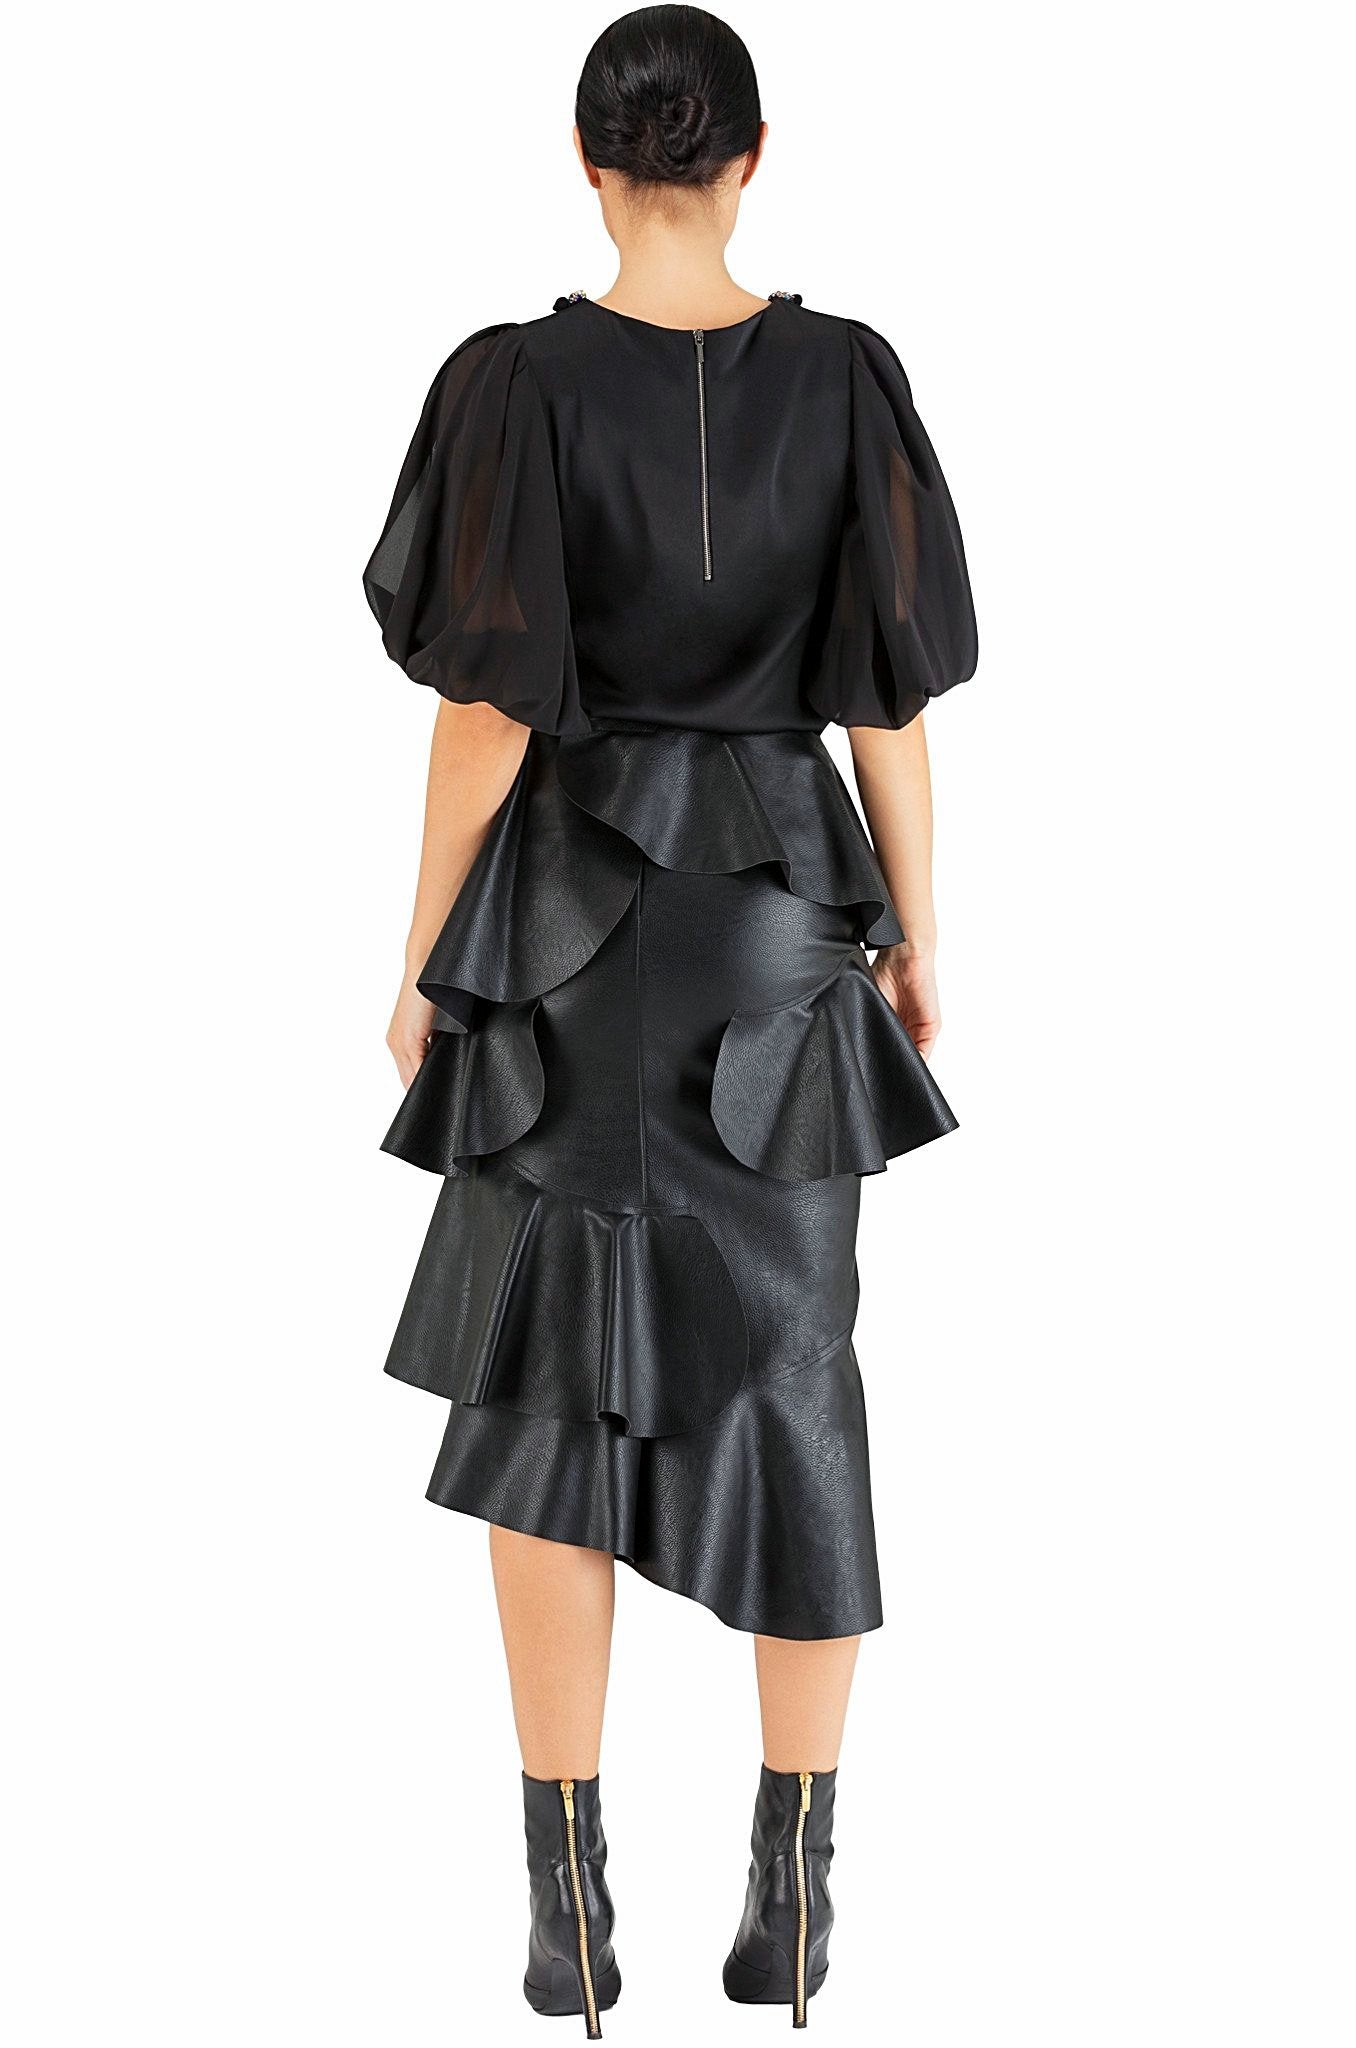 Black Ruffle Leather Skirt - 70% off